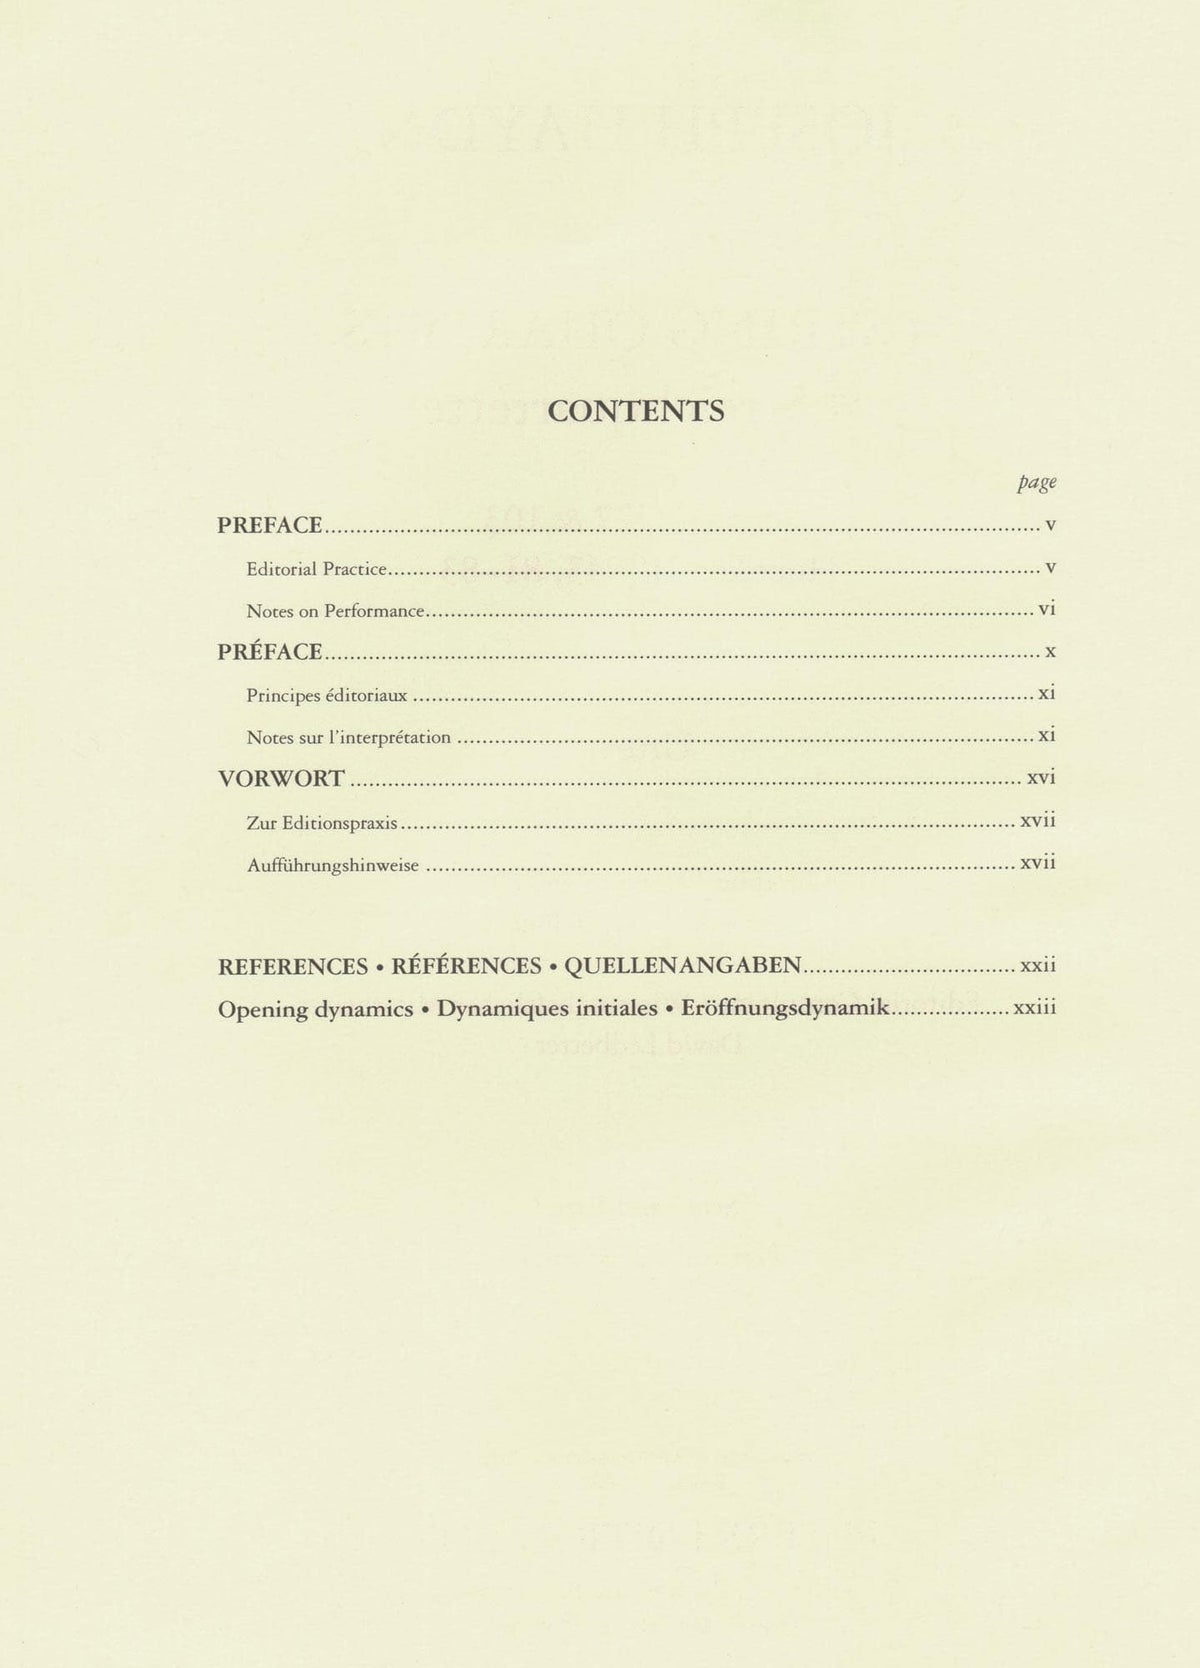 Haydn, Franz Joseph - 4 String Quartets, Op. 42, 77, 103 - Score and Parts - edited by Simon Rowland-Jones - Edition Peters URTEXT